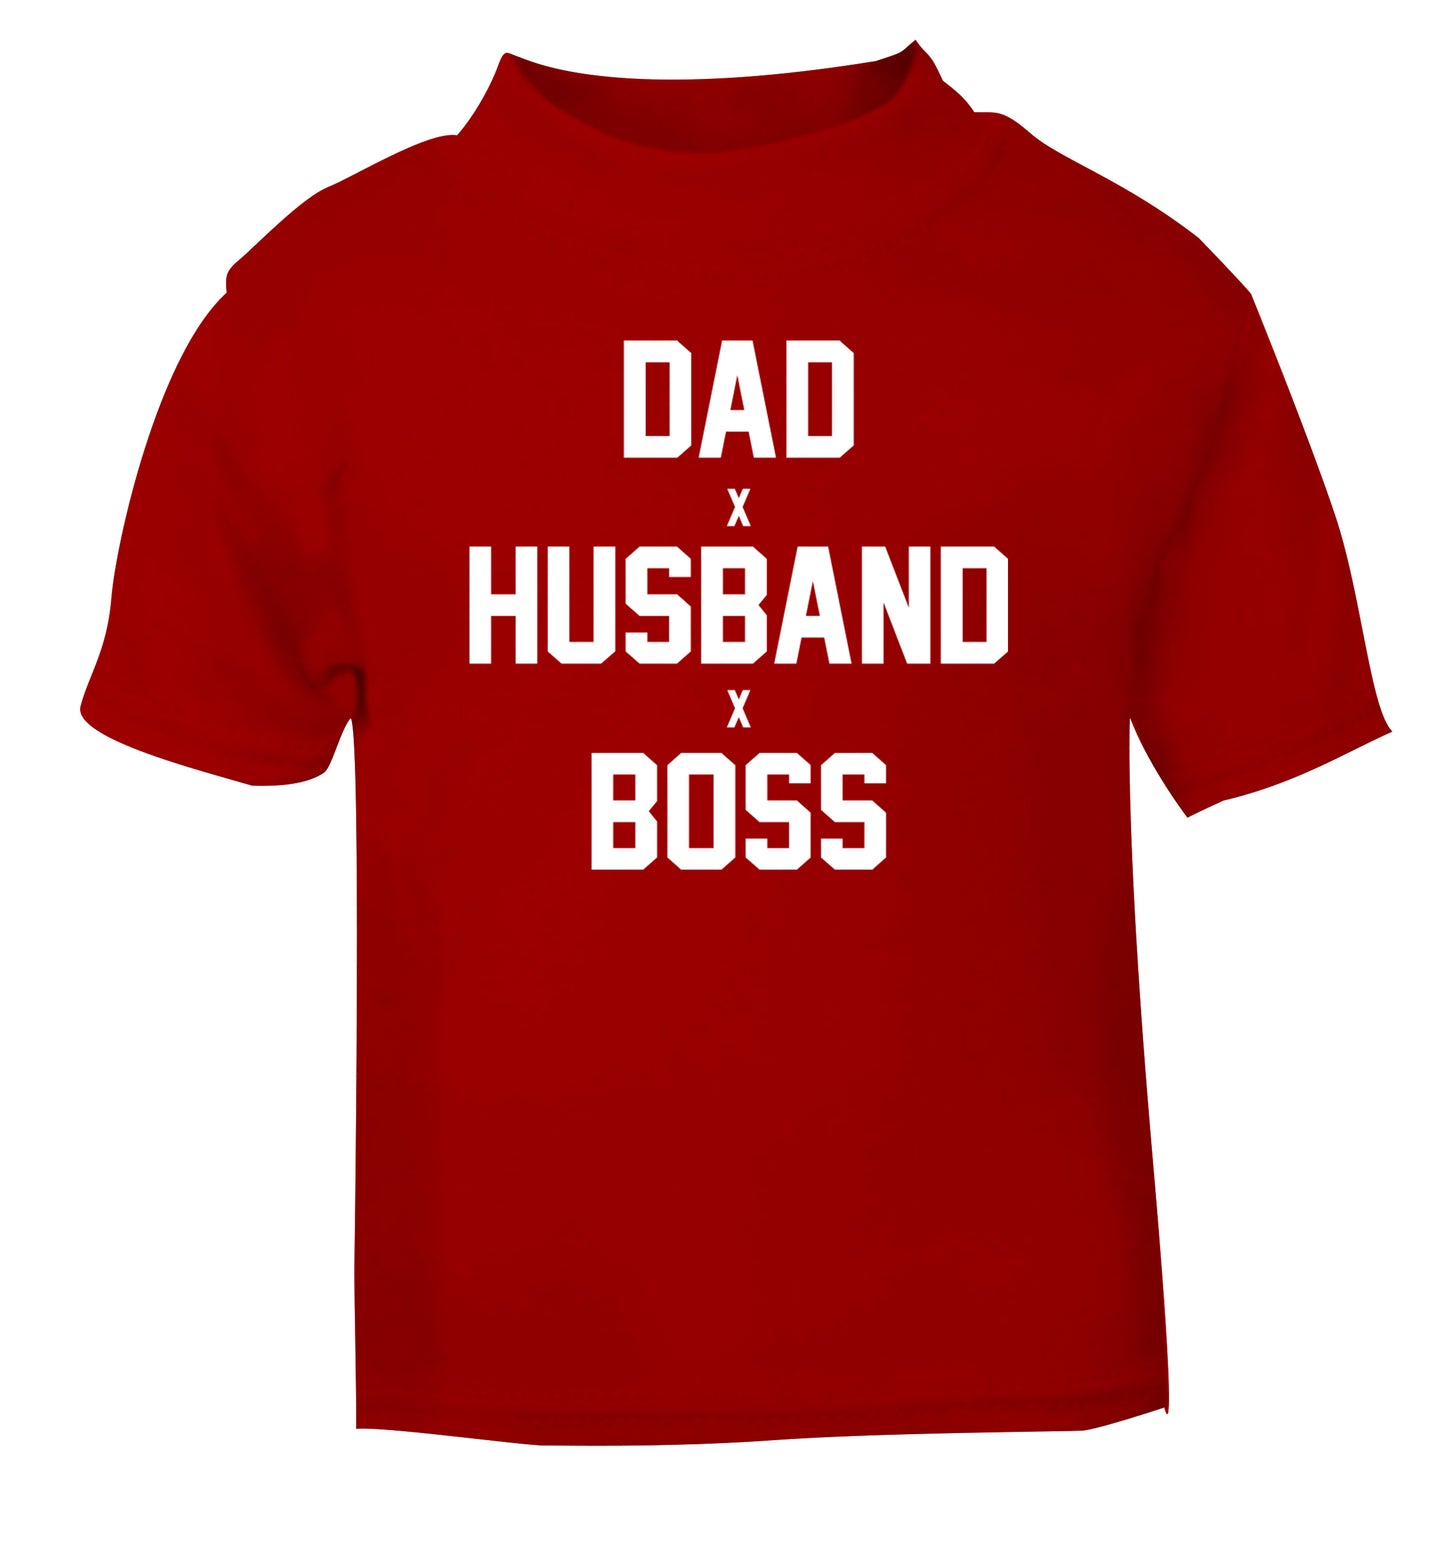 Dad husband boss red Baby Toddler Tshirt 2 Years